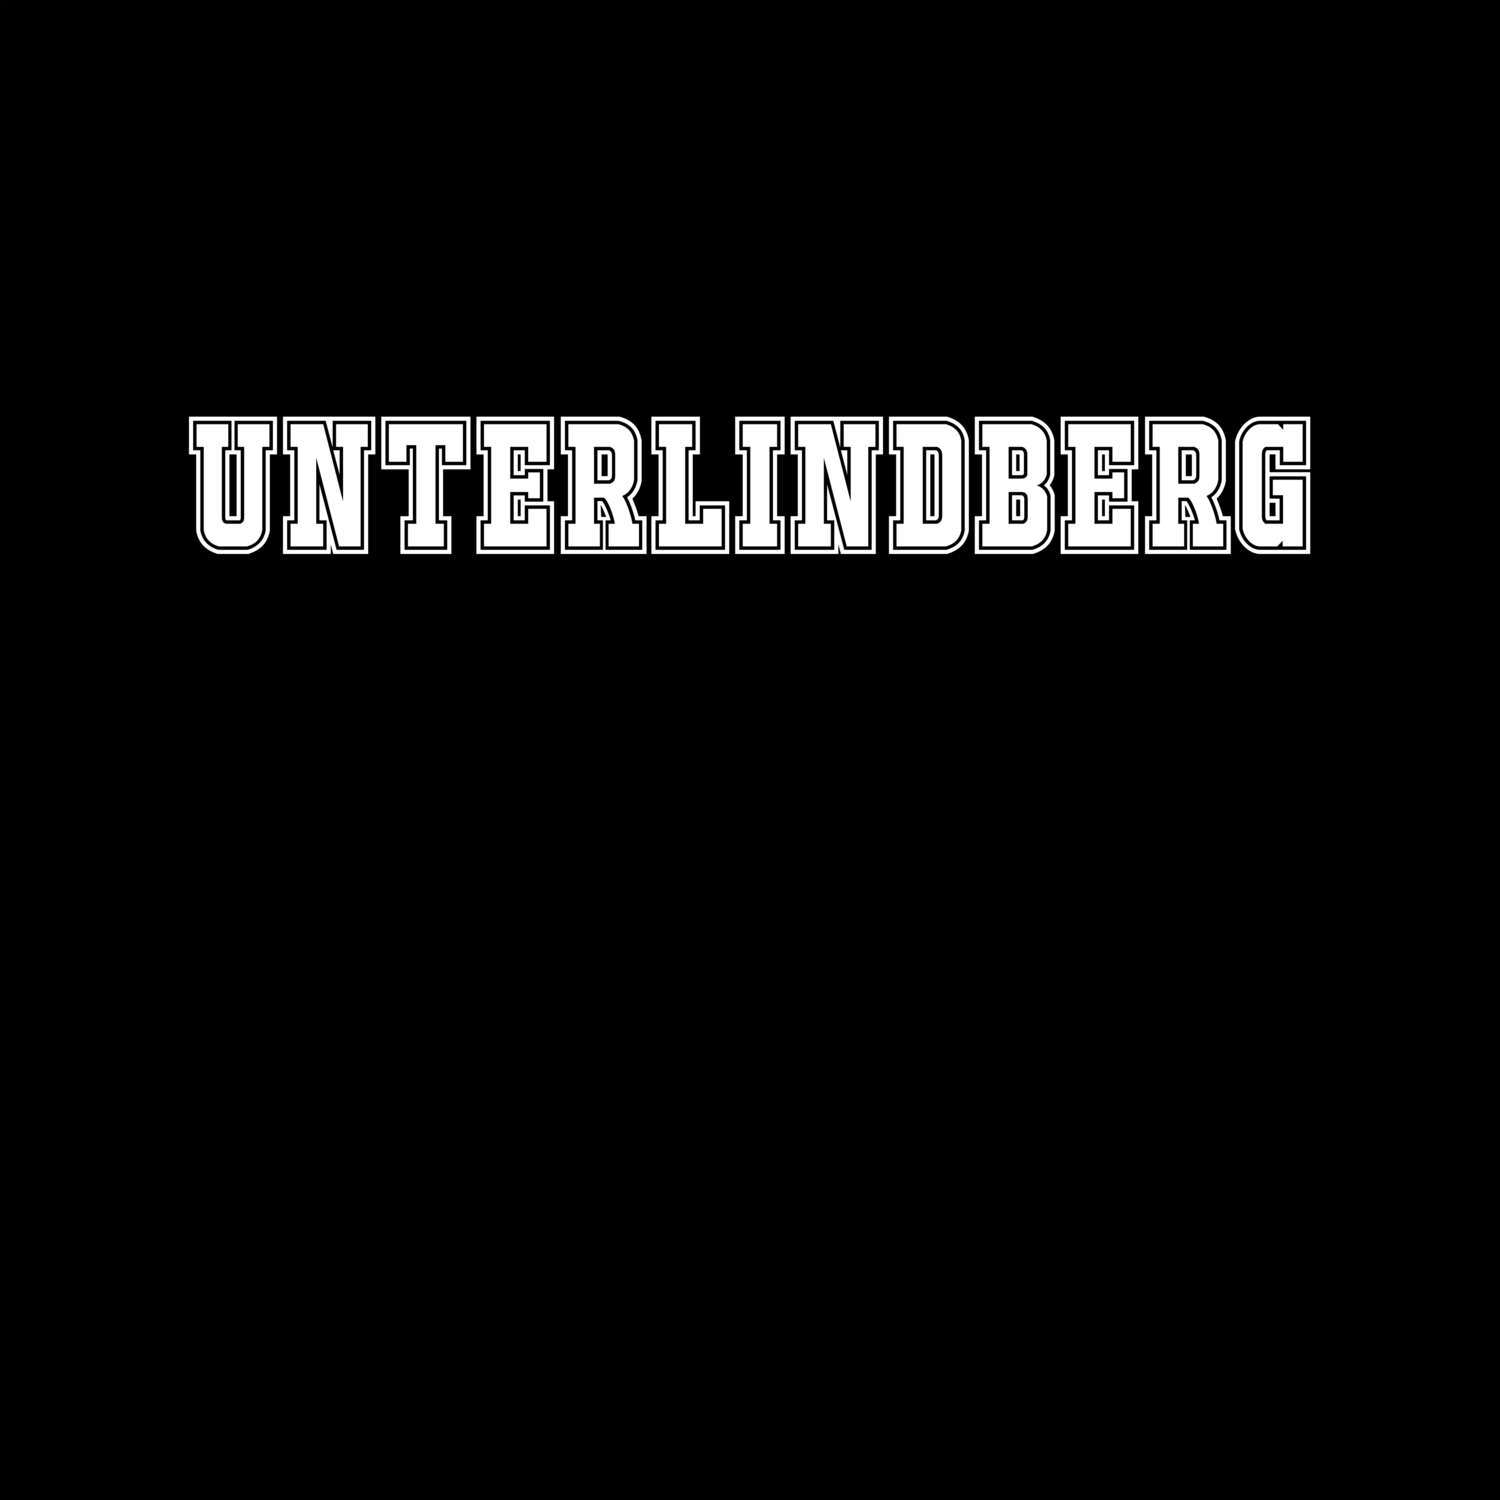 Unterlindberg T-Shirt »Classic«